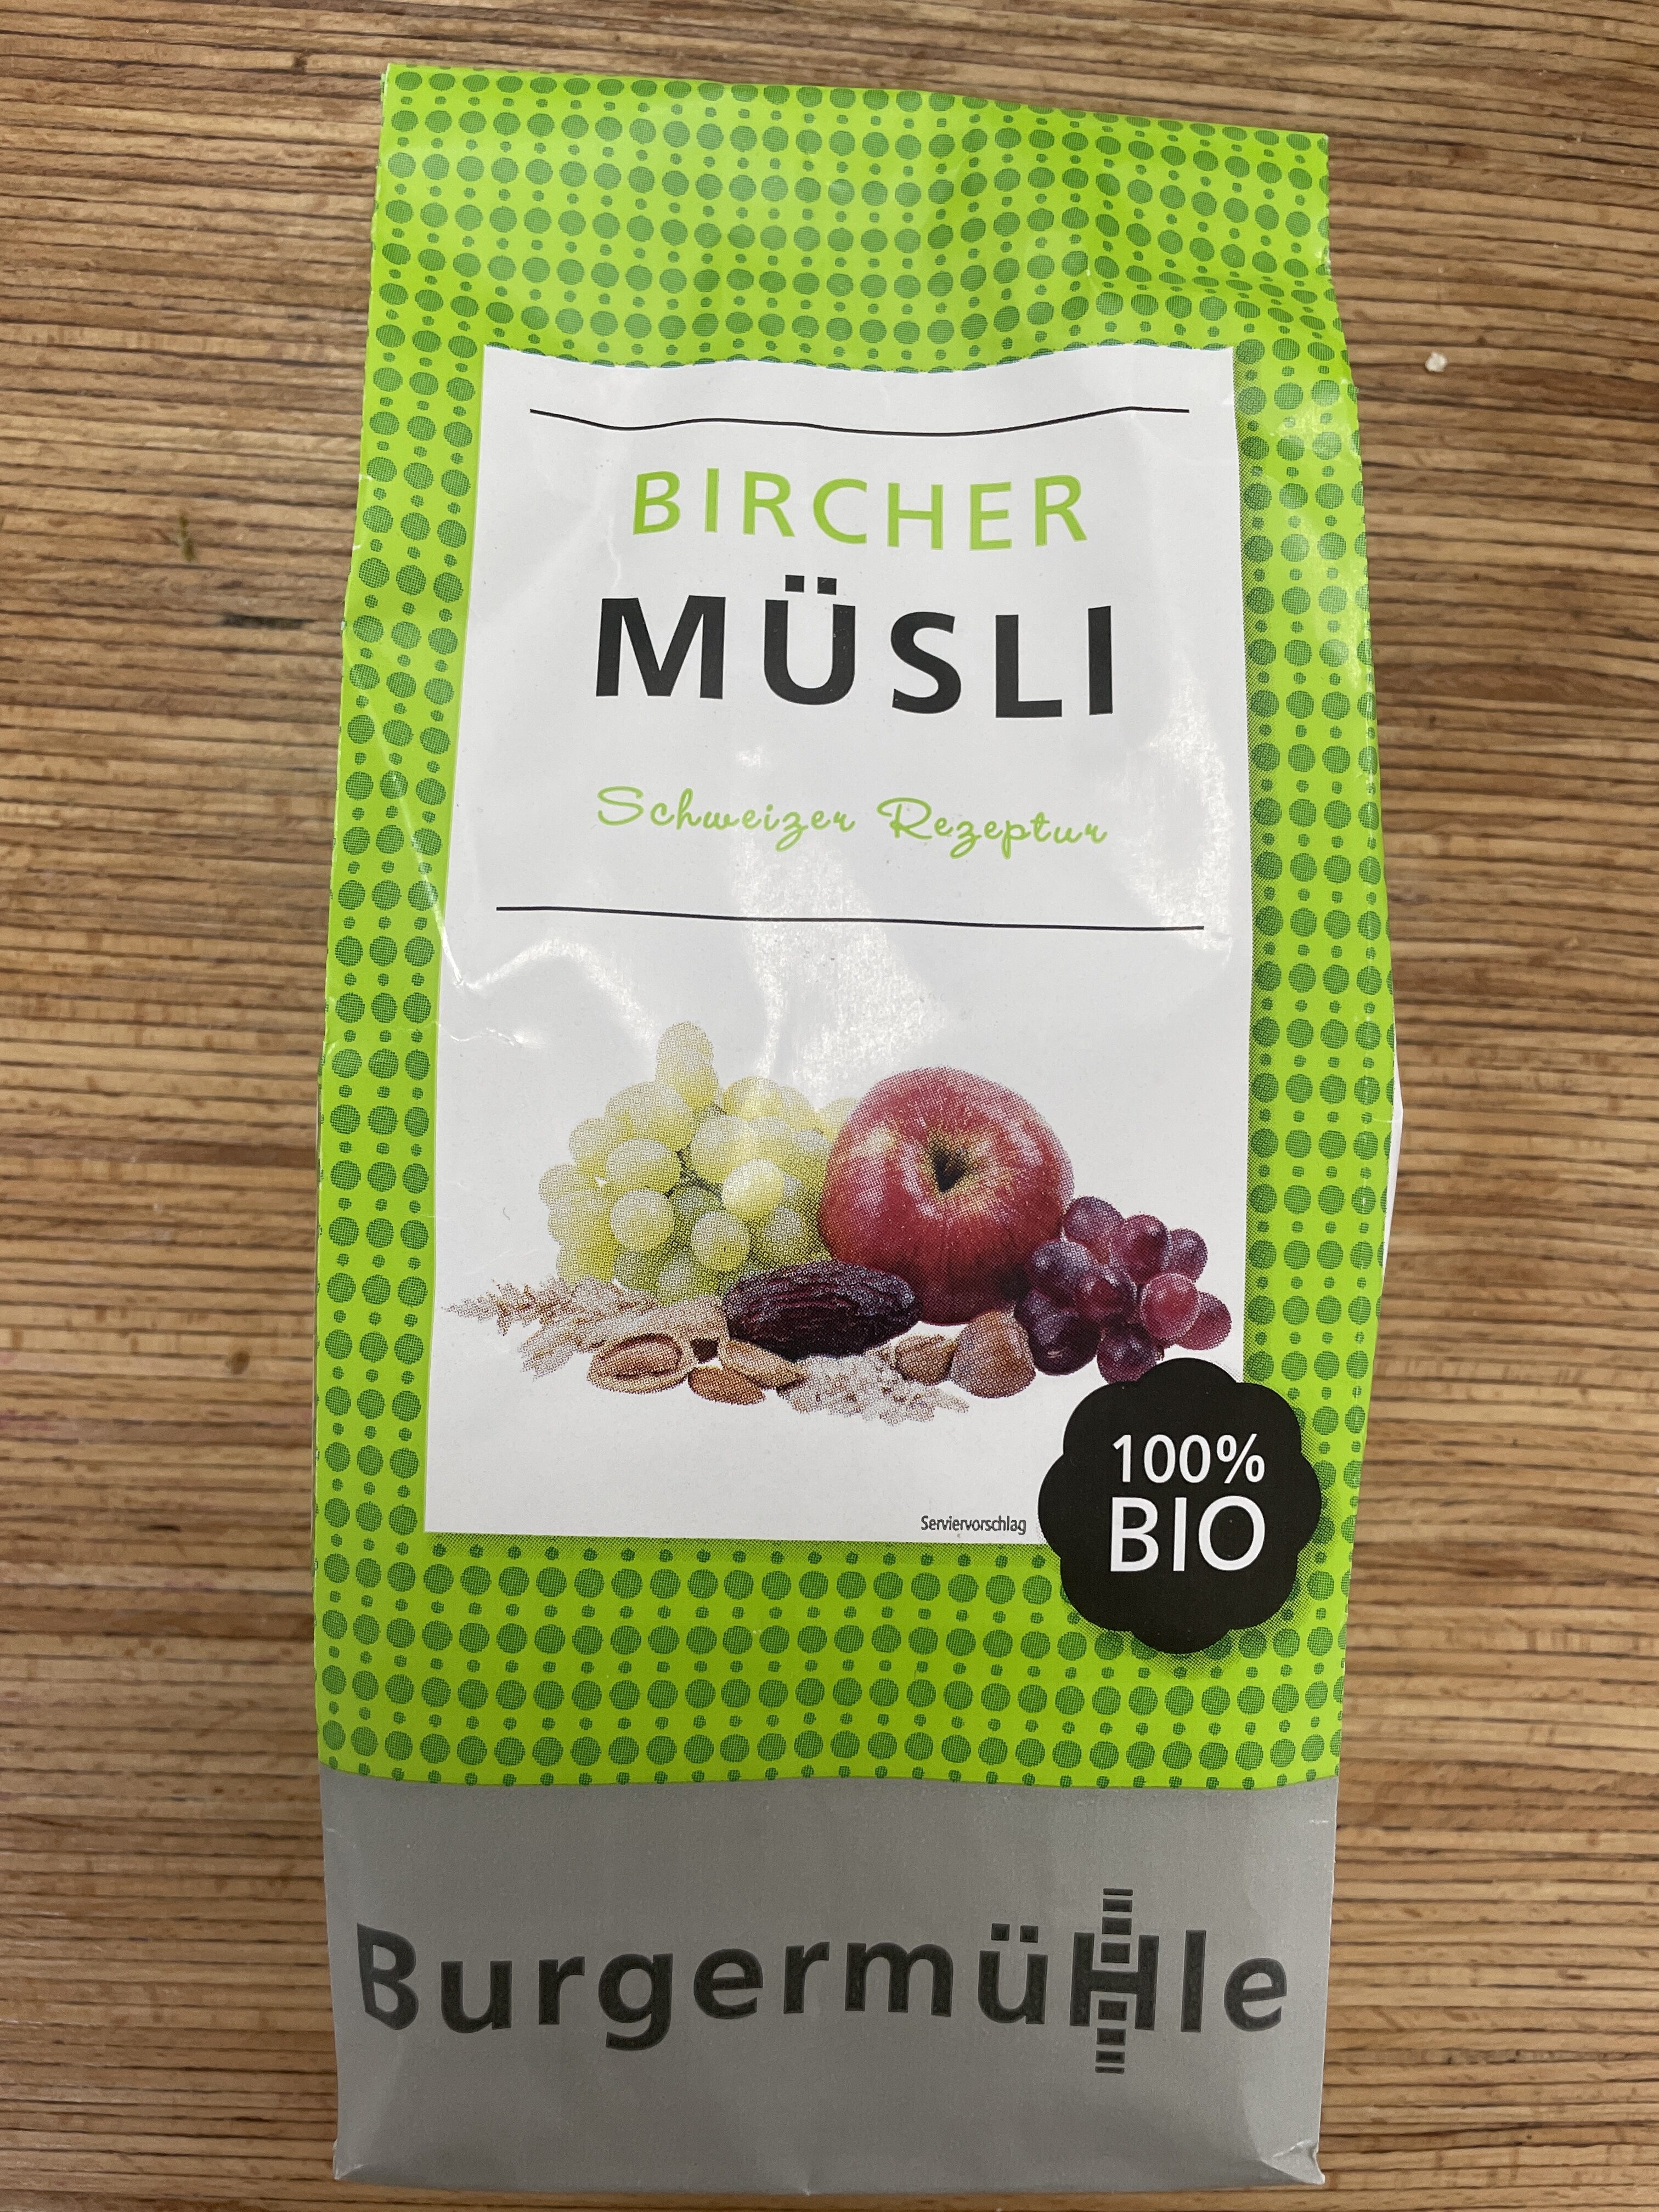 Bircher Müsli - Produkt - en